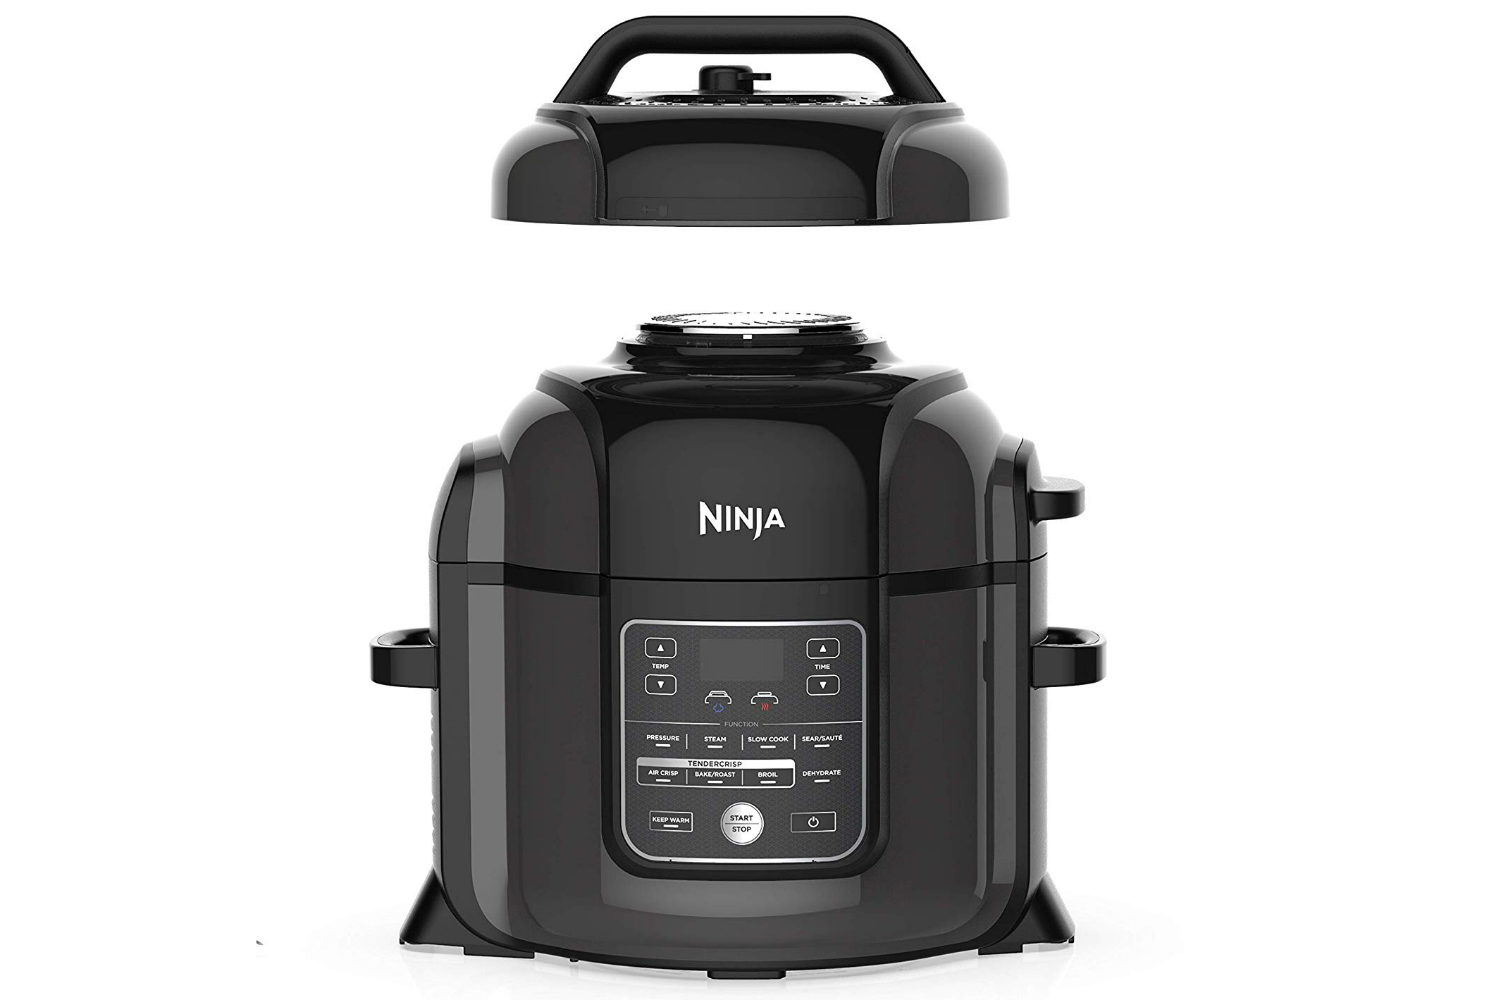 https://www.digitaltrends.com/wp-content/uploads/2019/05/ninja-op401-foodi-8-quart-pressure-steamer-air-fryer-all-in-one-1.jpg?p=1